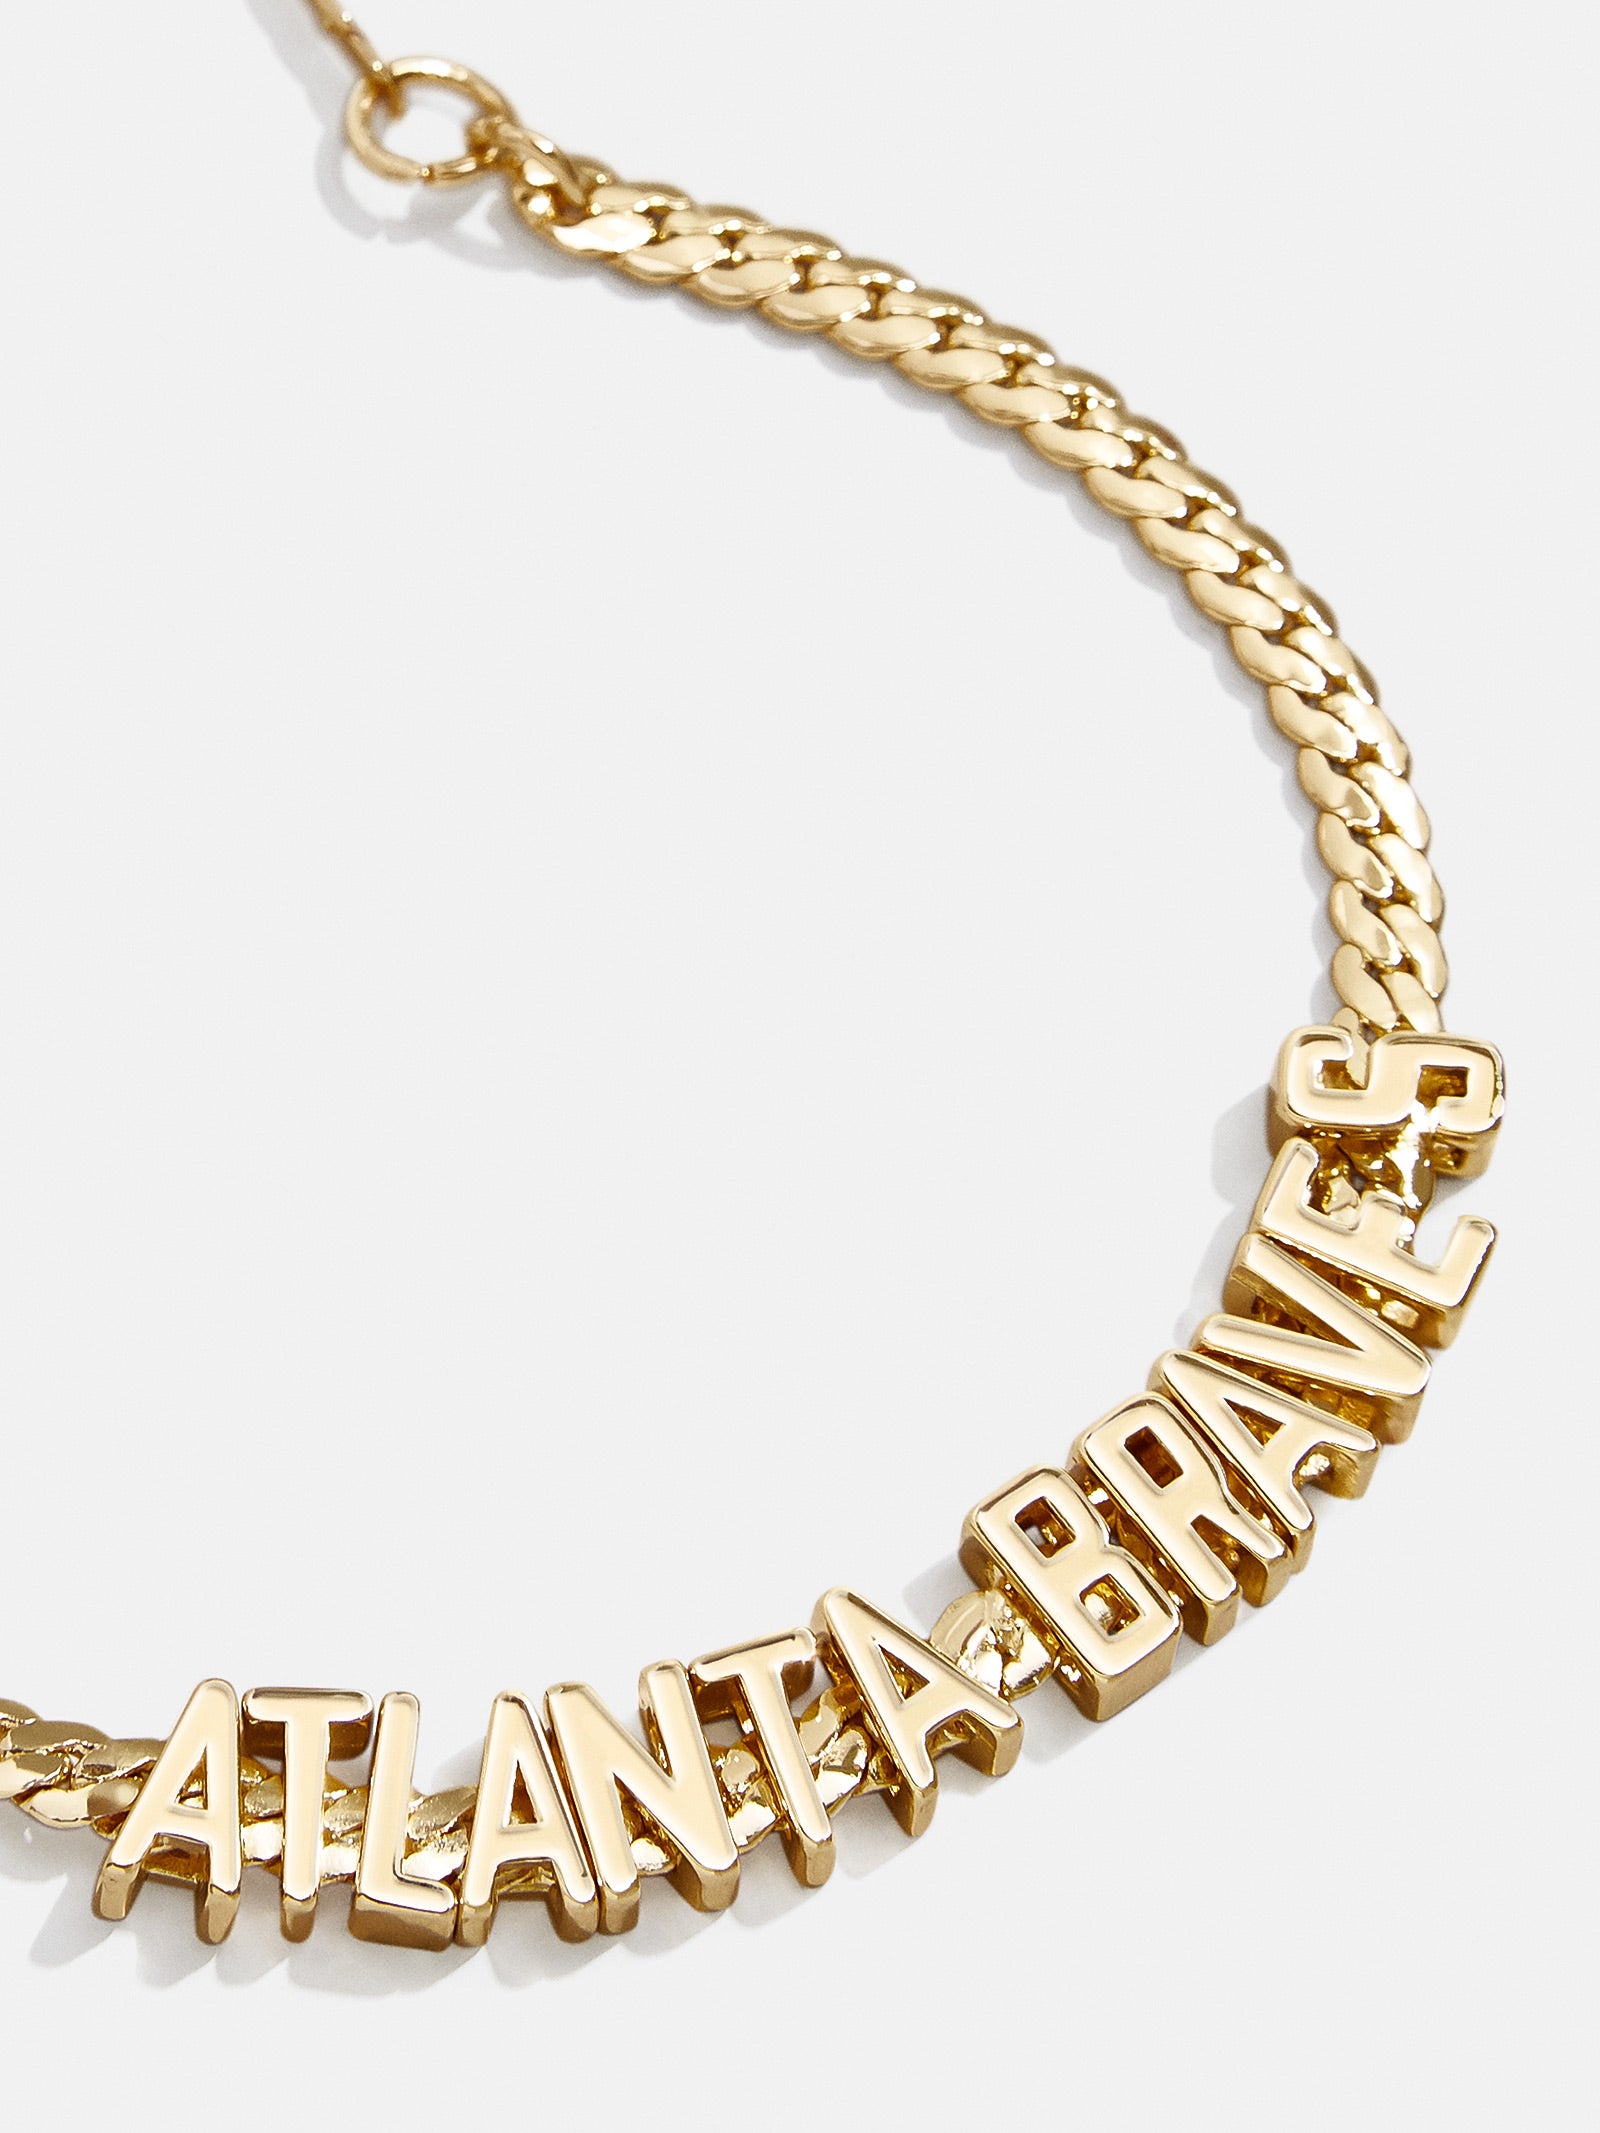 Baublebar MLB Gold Curb Chain Bracelet - Atlanta Braves